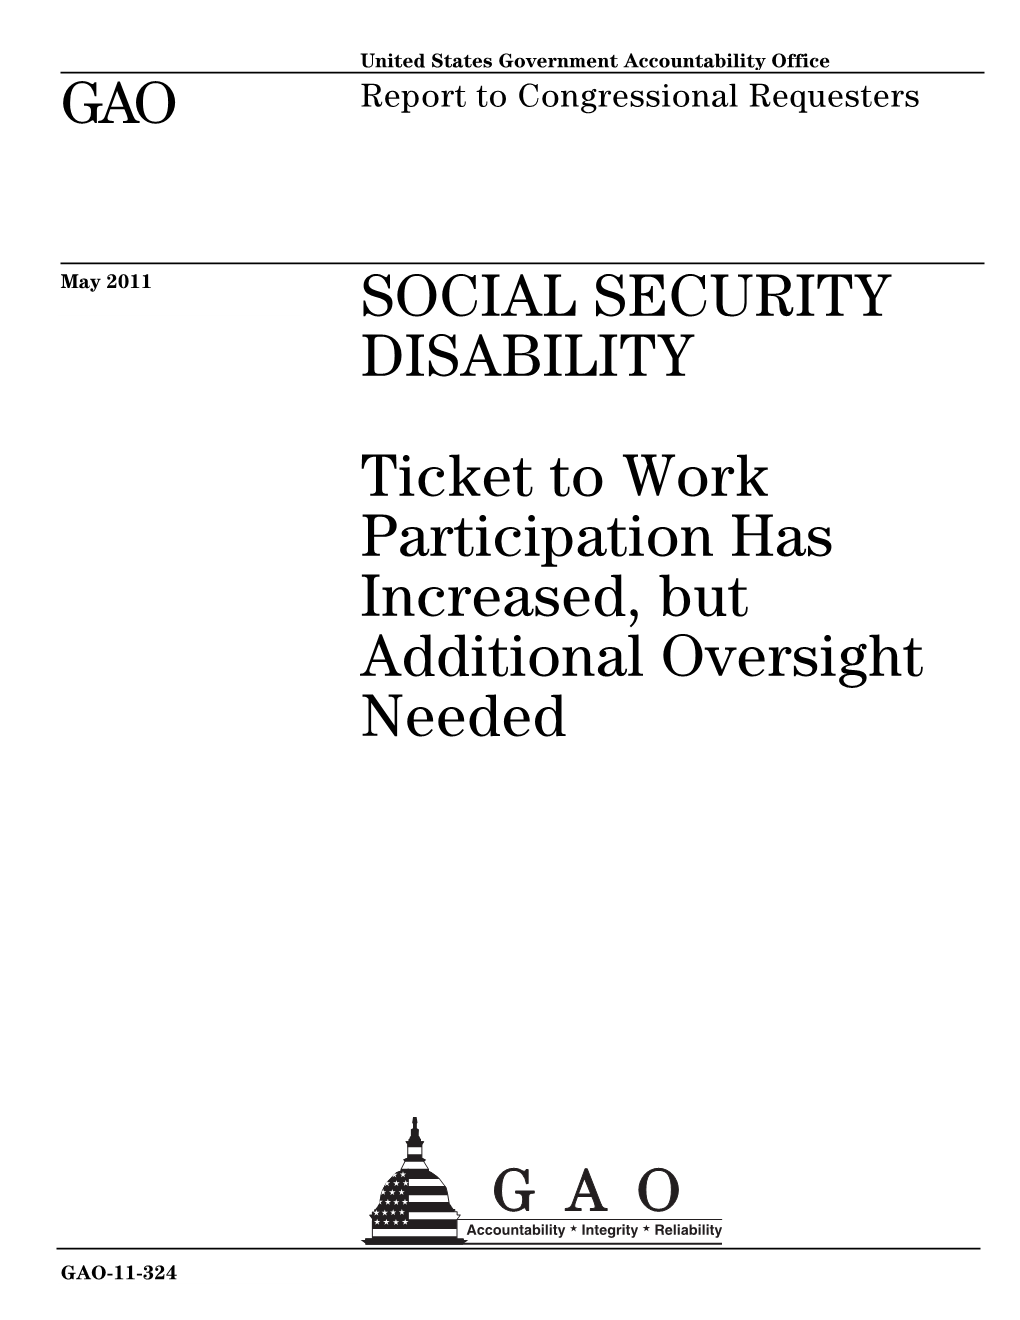 GAO-11-324 Social Security Disability